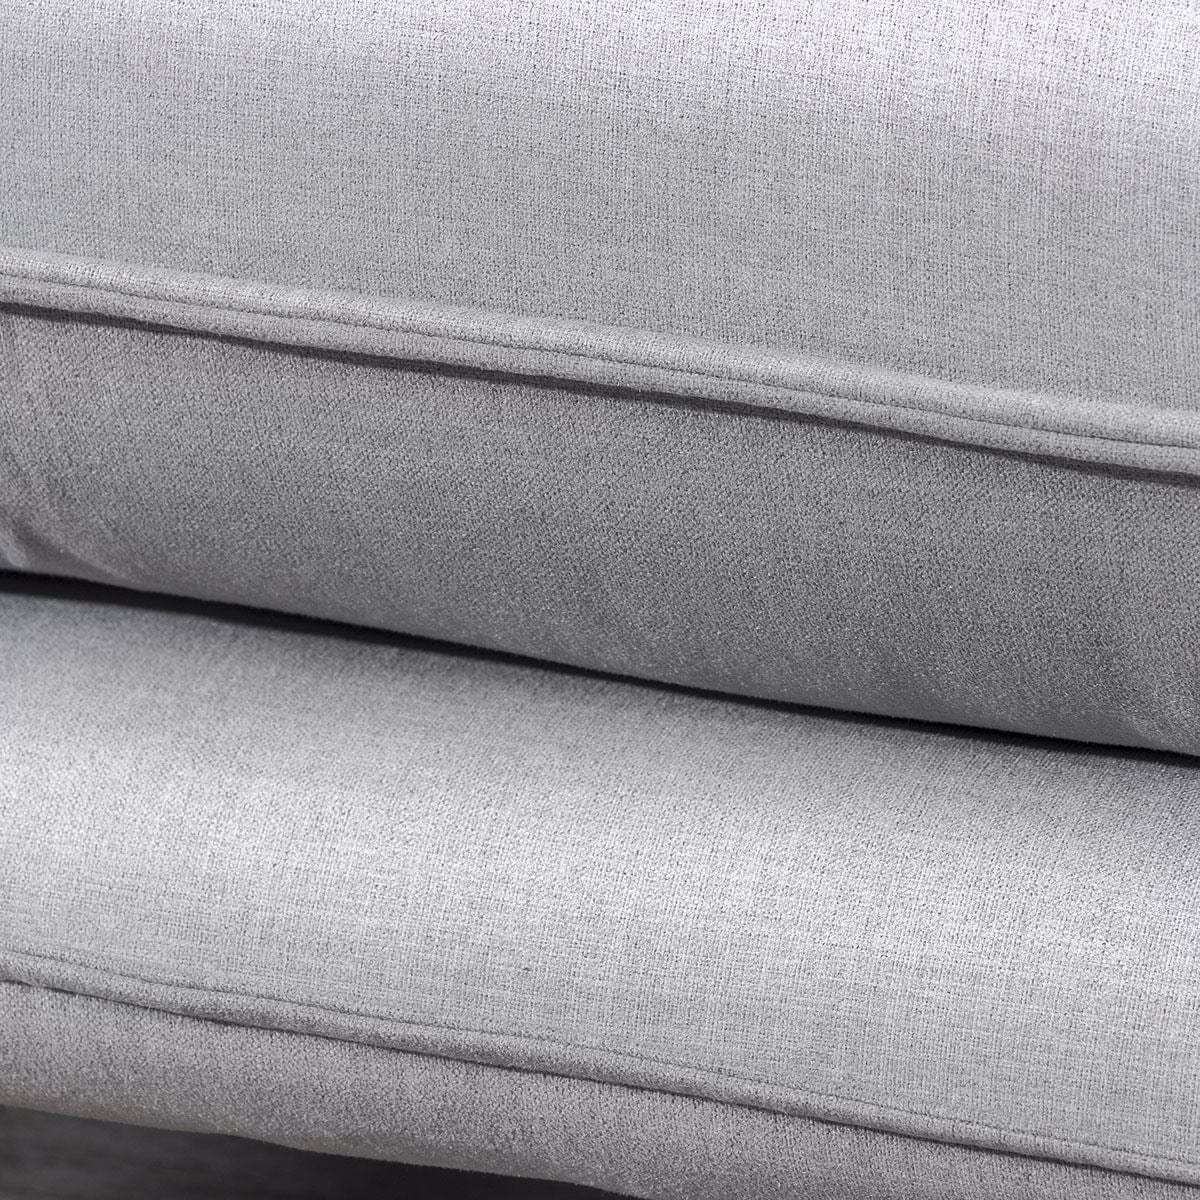 Quatropi Rachel Range Designer Footstool / Ottoman Super Soft Many Fabrics 0.7x0.9m